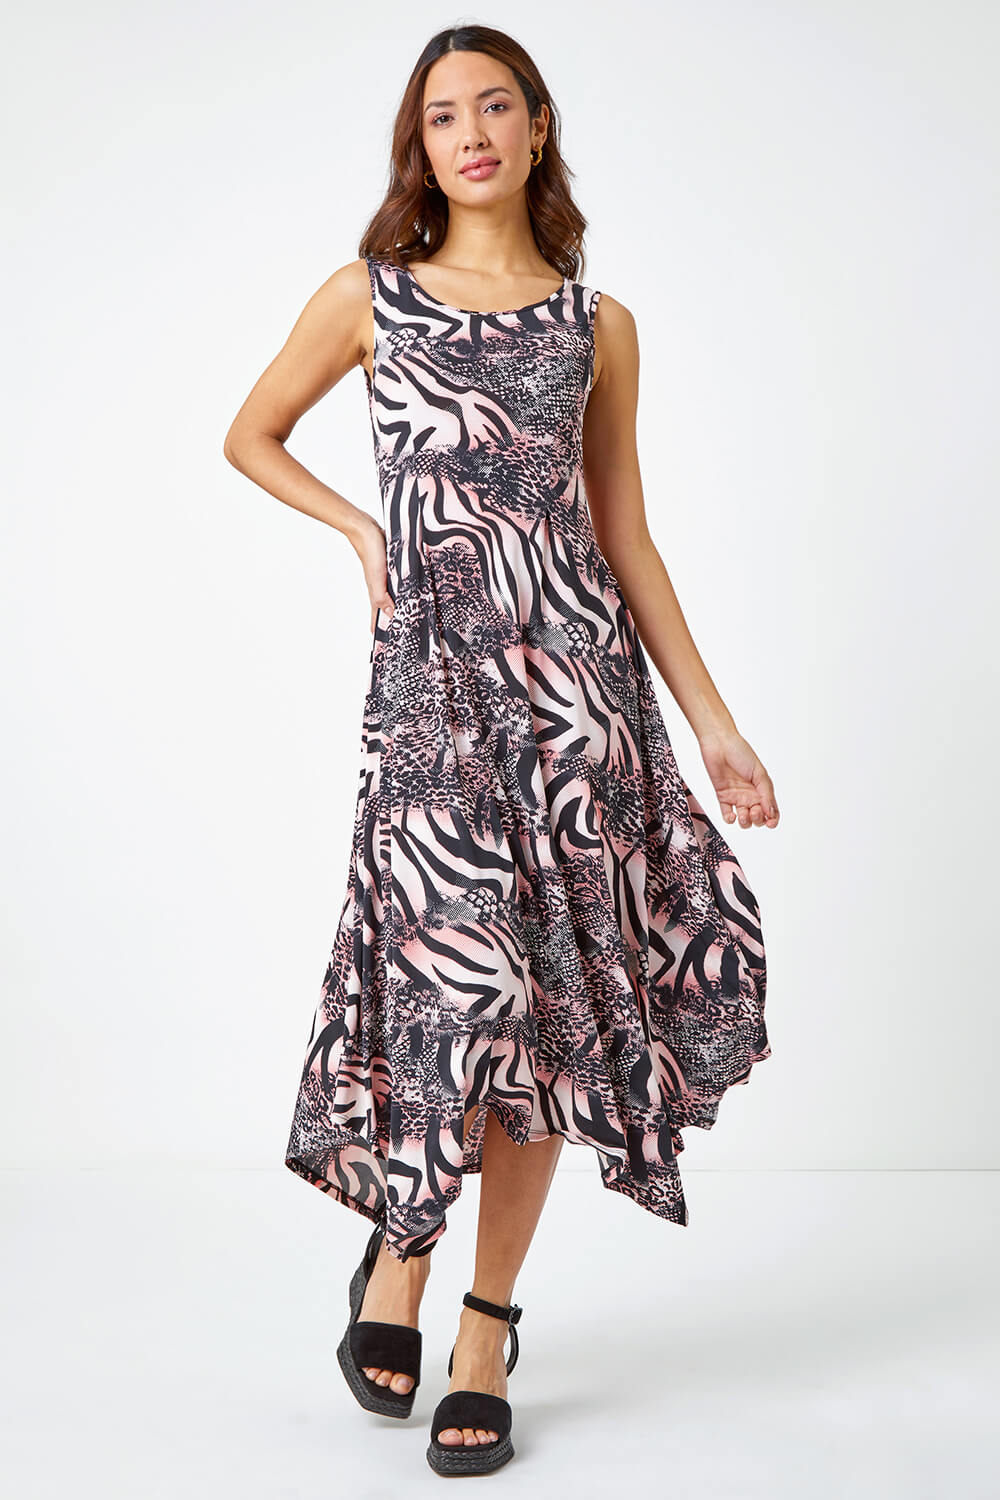 PINK Sleeveless Animal Midi Dress, Image 2 of 5